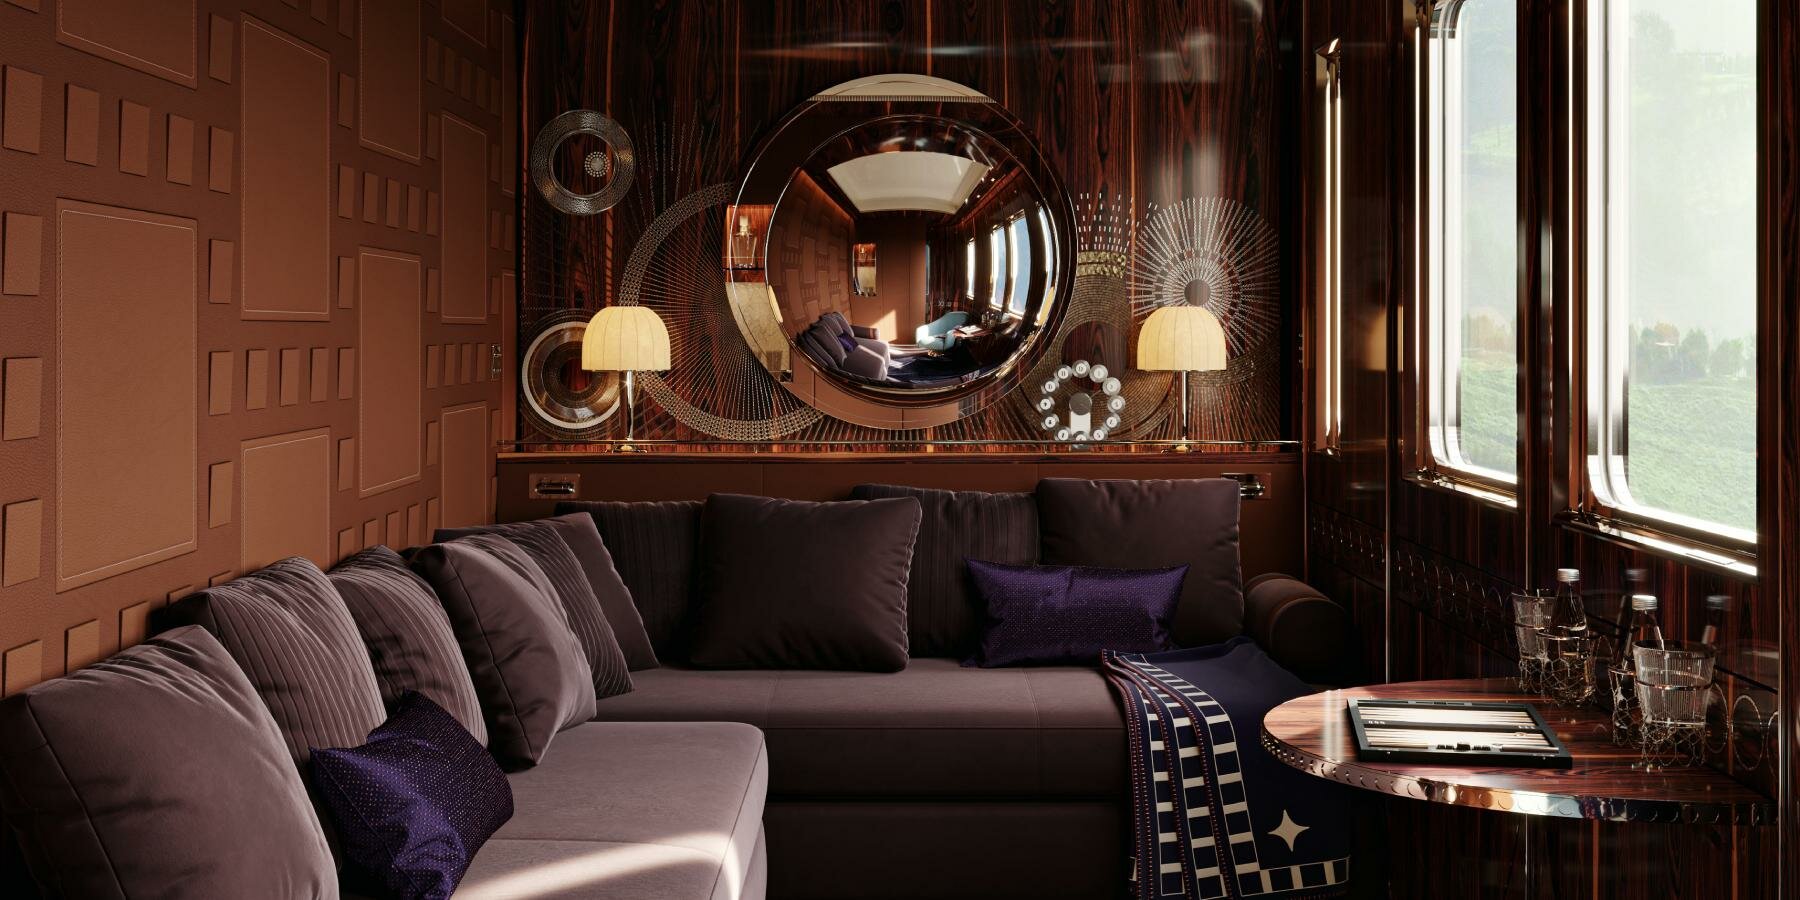 Orient Express Revelation travels to Design Miami/